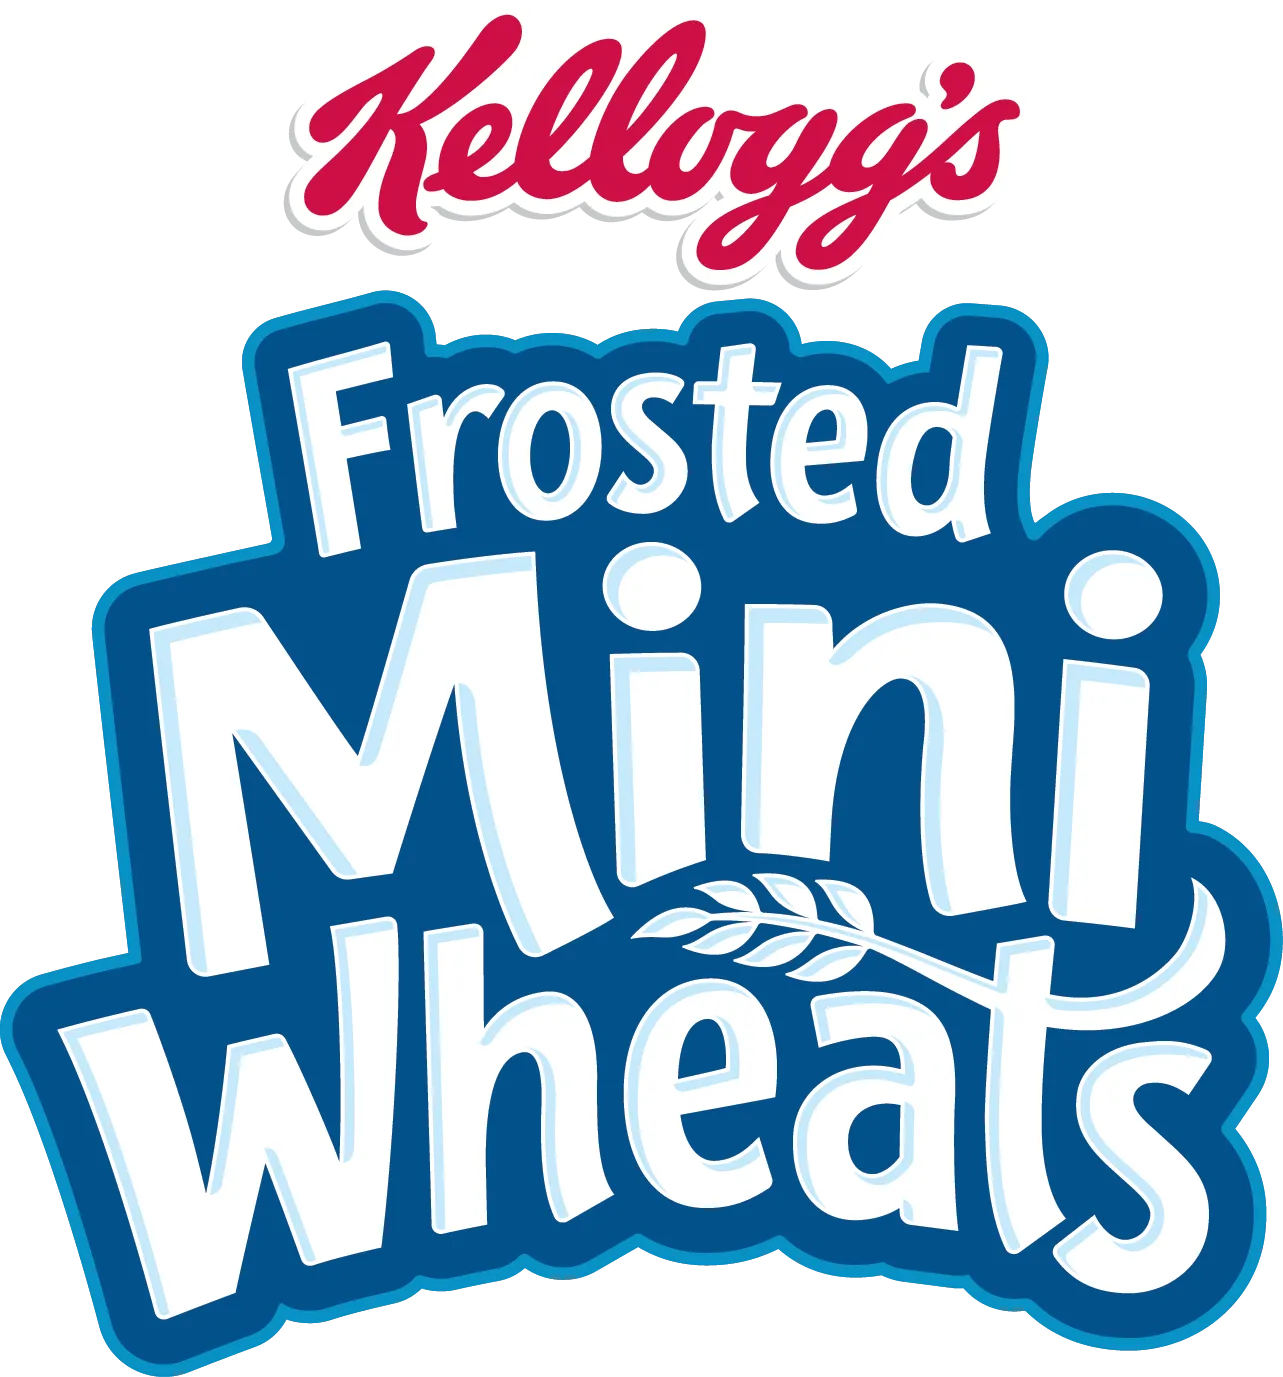 Kellogg's Frosted Mini Wheats